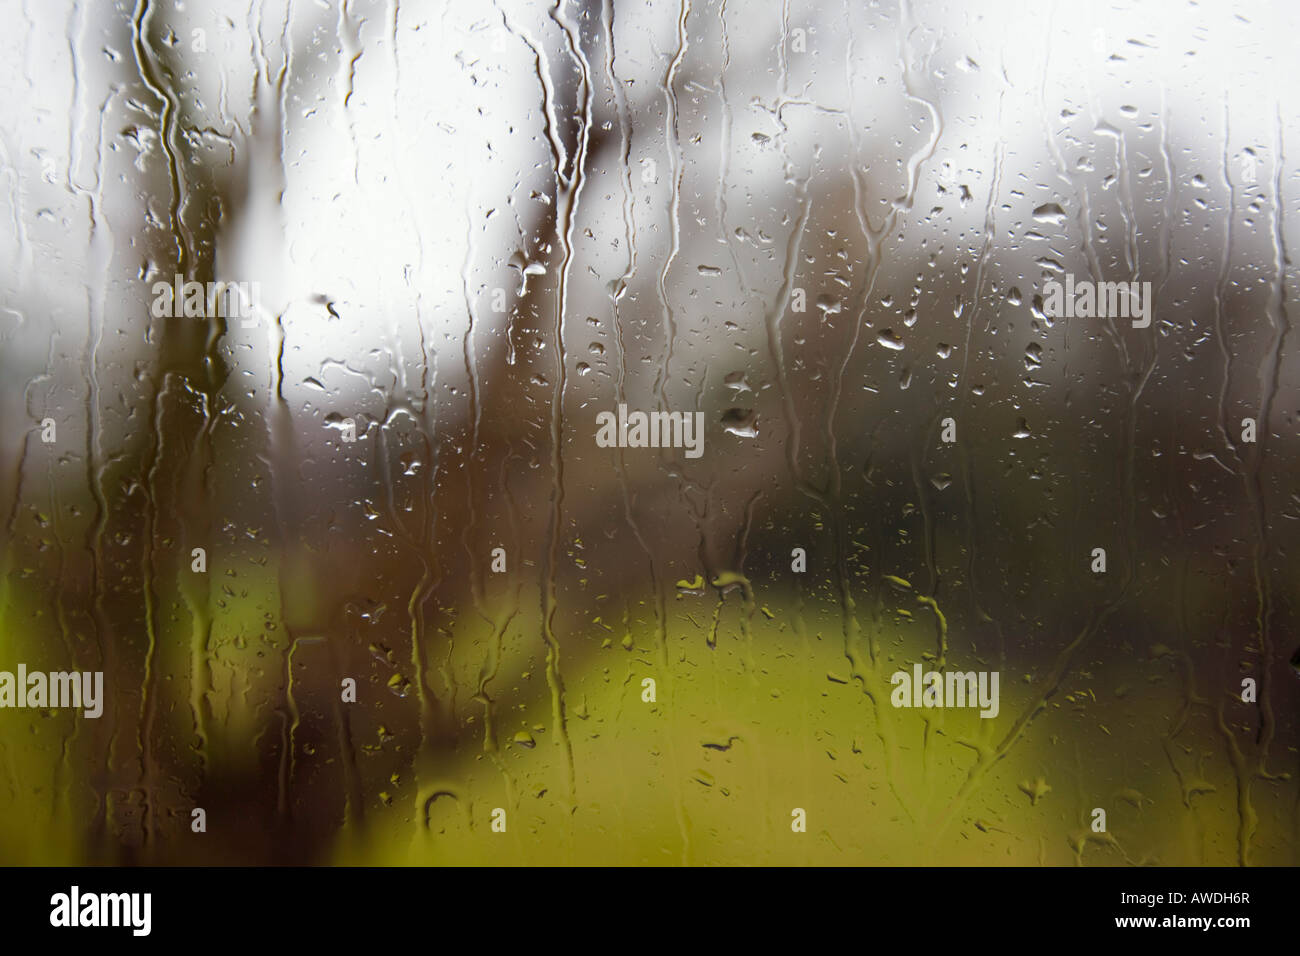 Uk Britain February Through Window With Rain Drops Of Water